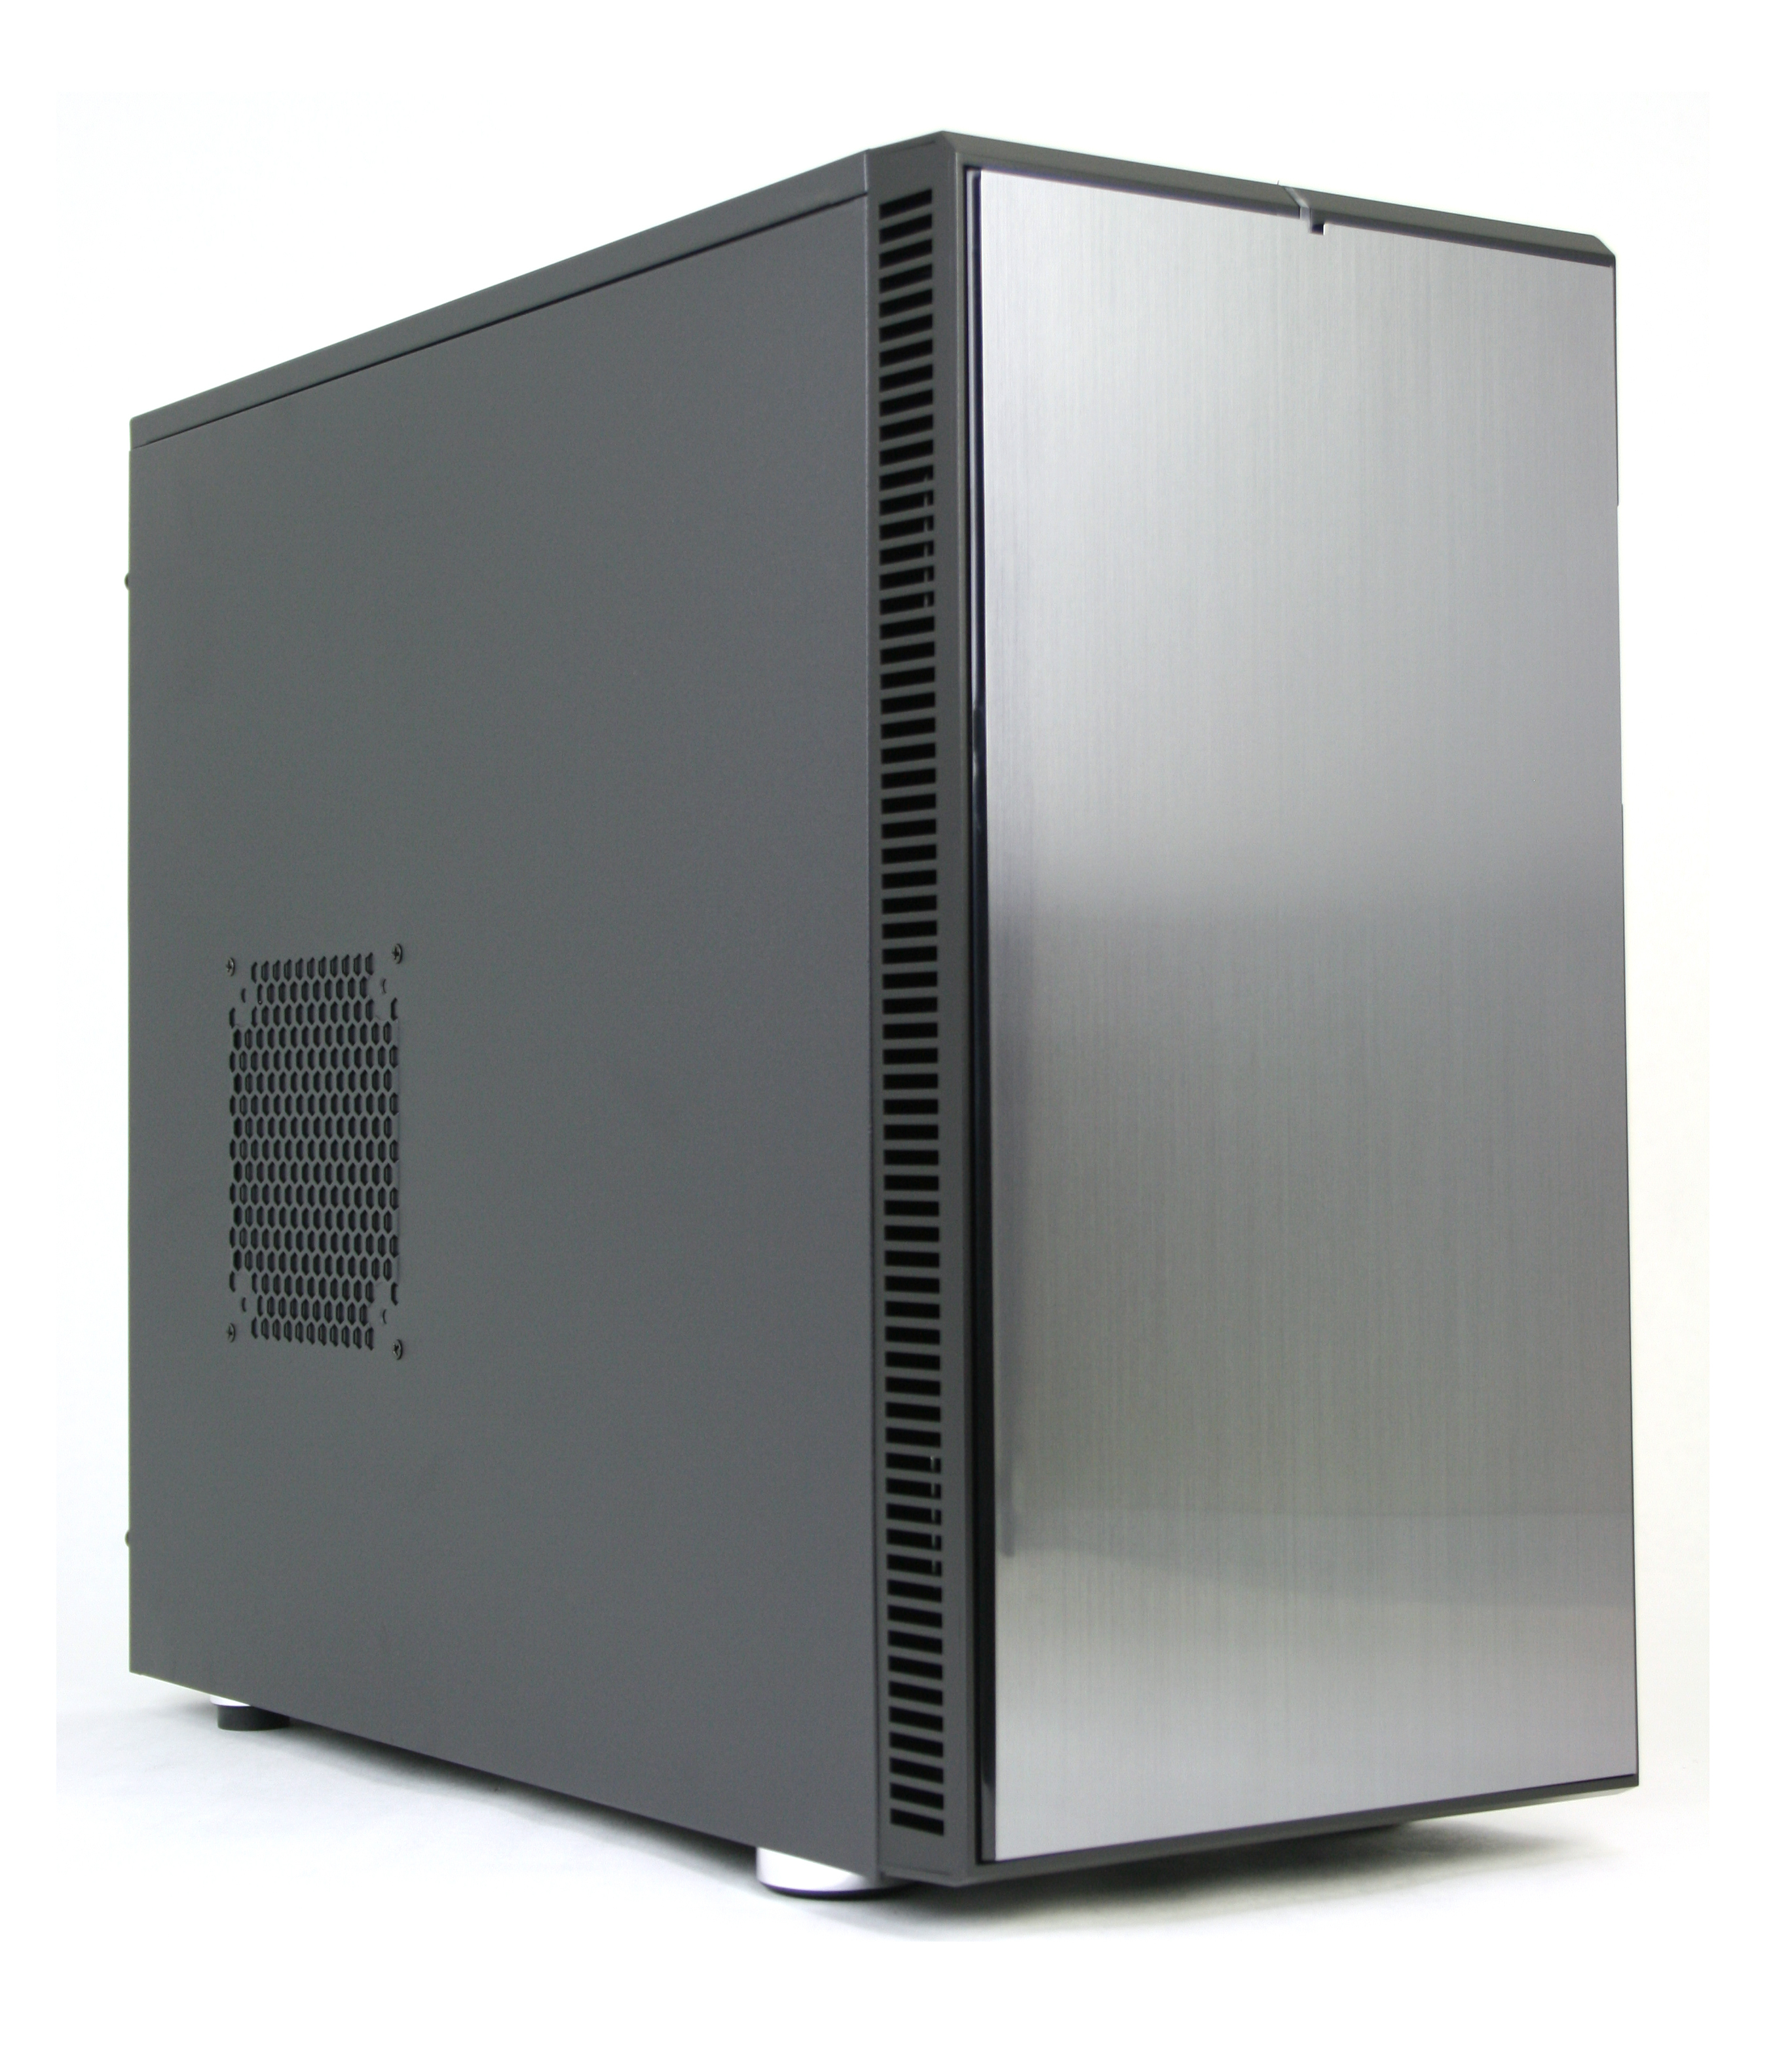 Configure PC w/ Fractal Design Define R4 Titanium Grey Case